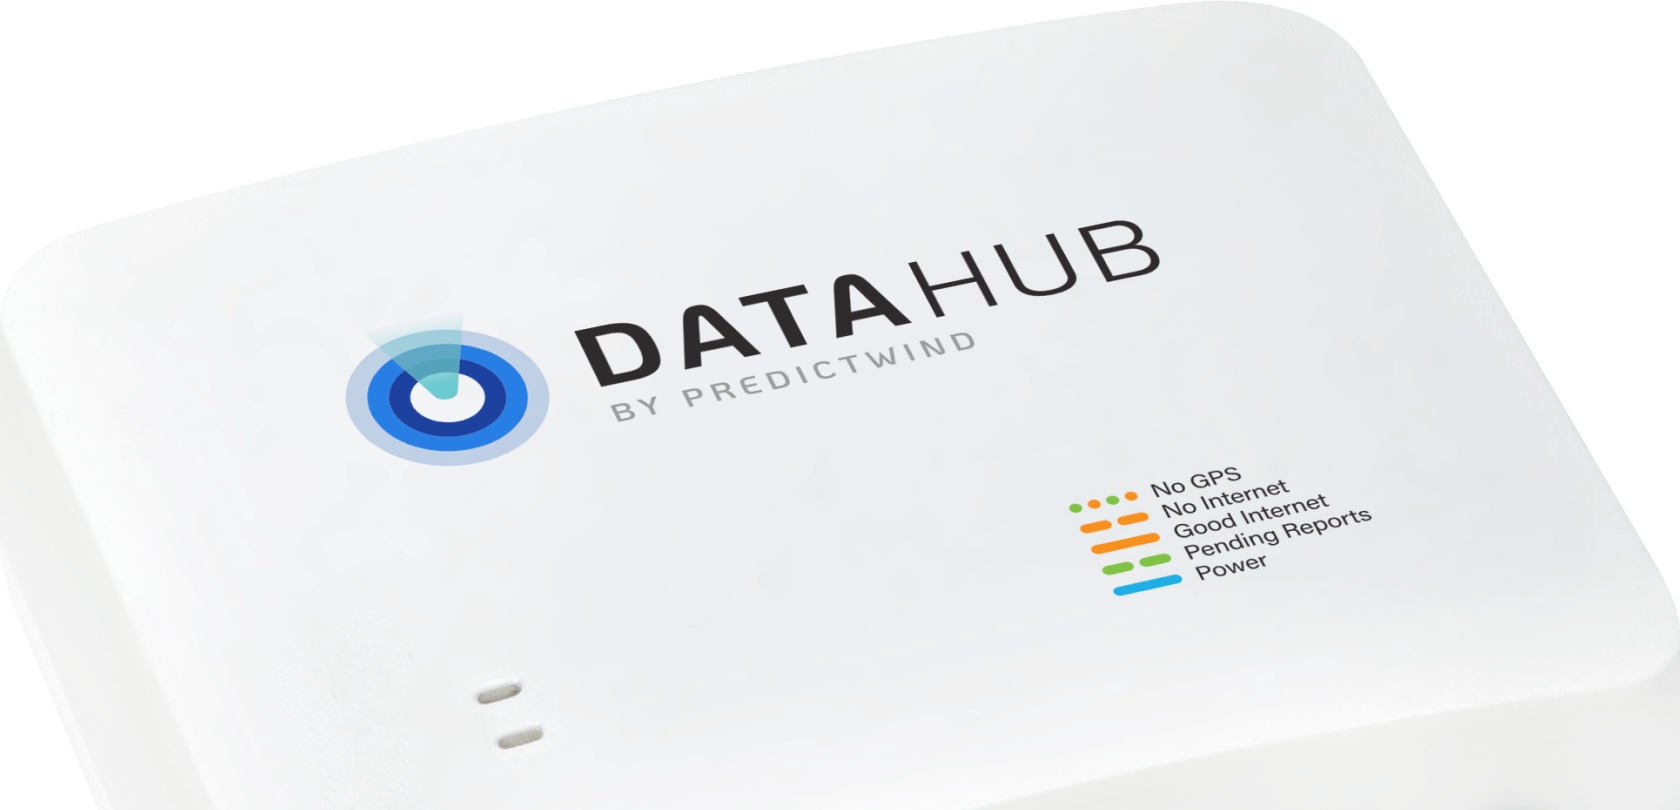 datahub by predictwind